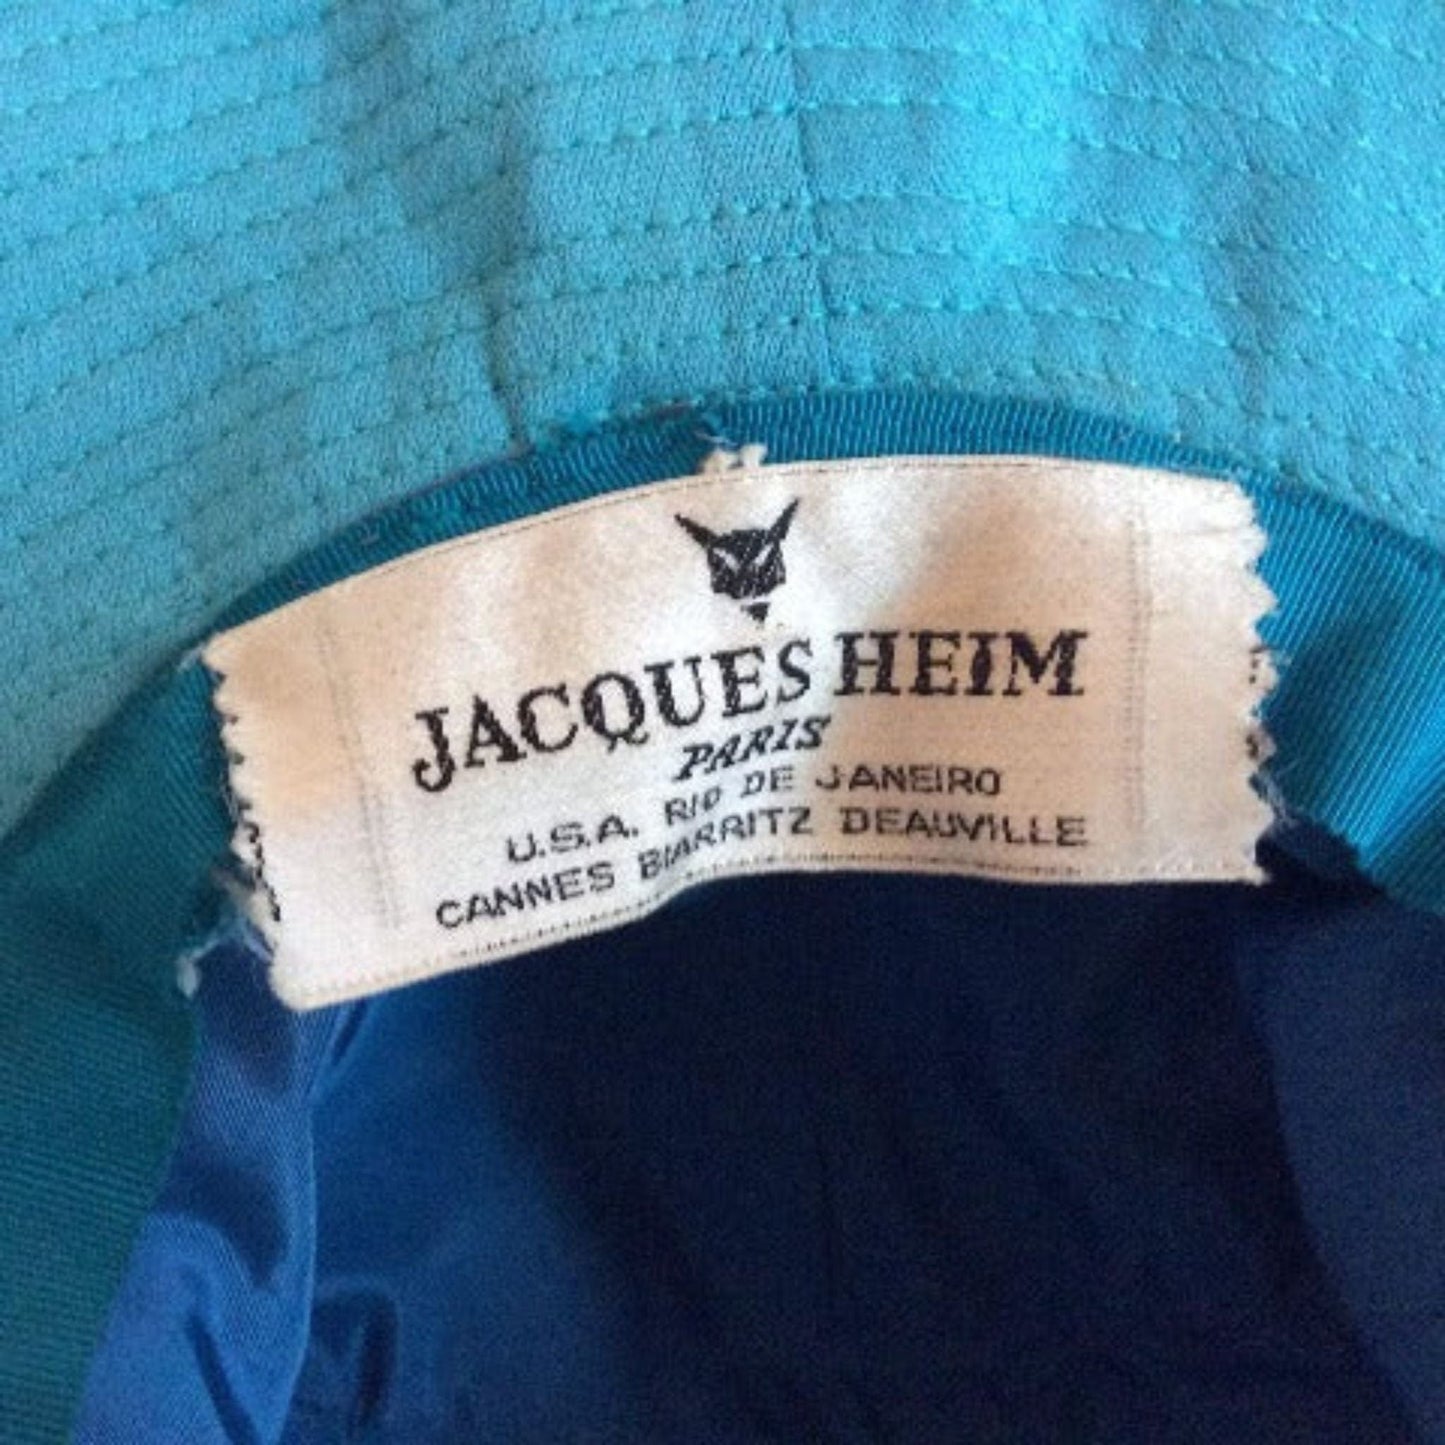 Jacques Heim Leather Hat Blue / Leather / Vintage 1960s